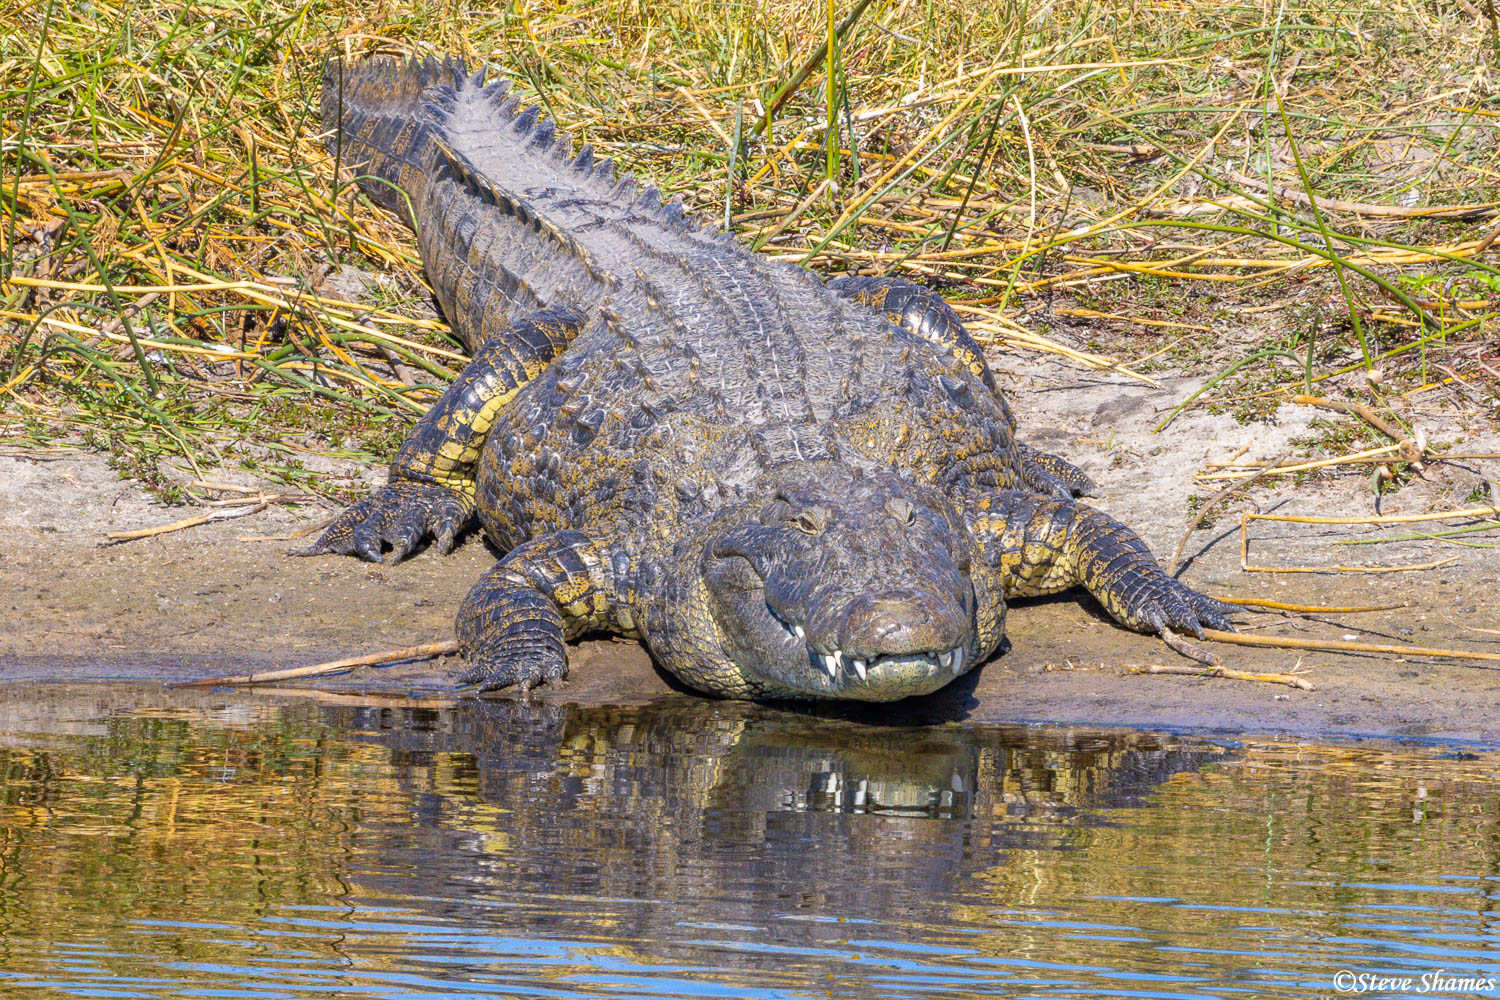 Head on, with a Boteti River crocodile